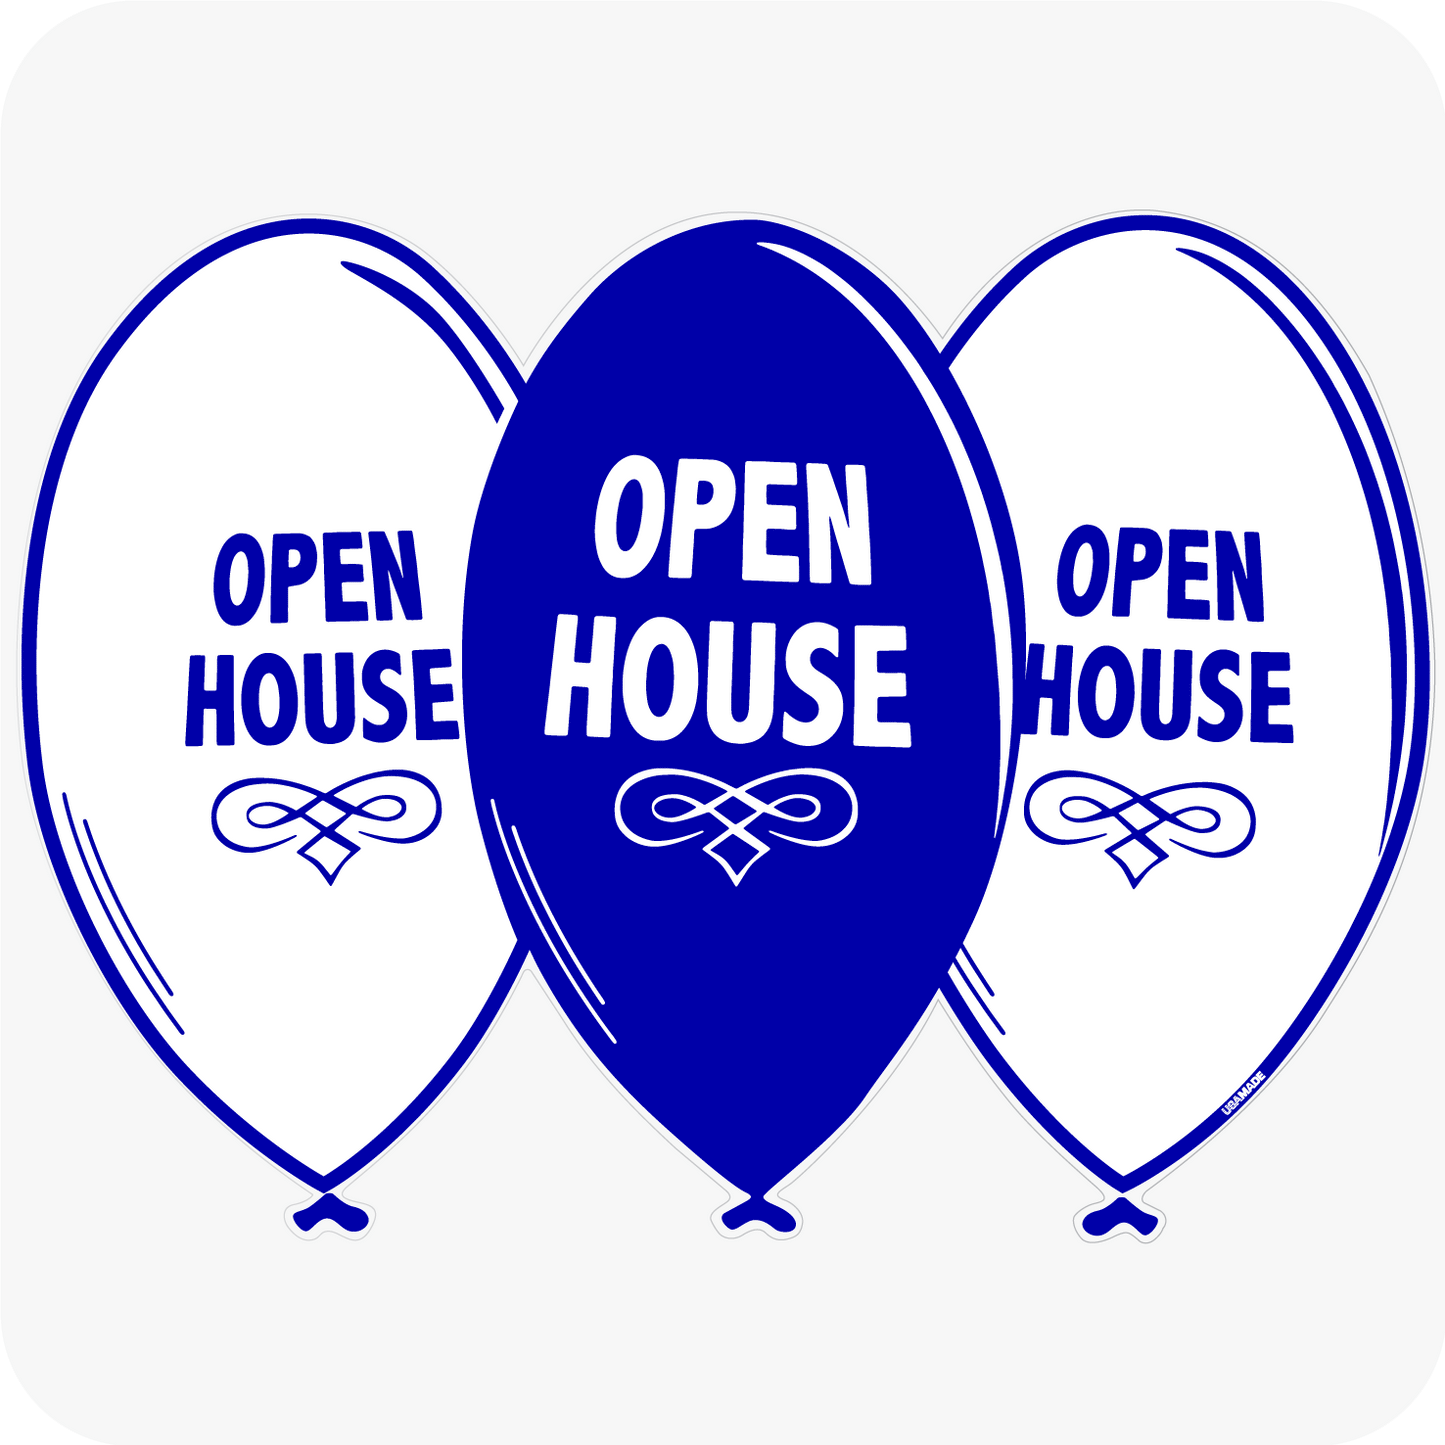 Open House Balloon Yard Sign 24 x 18 - Blue